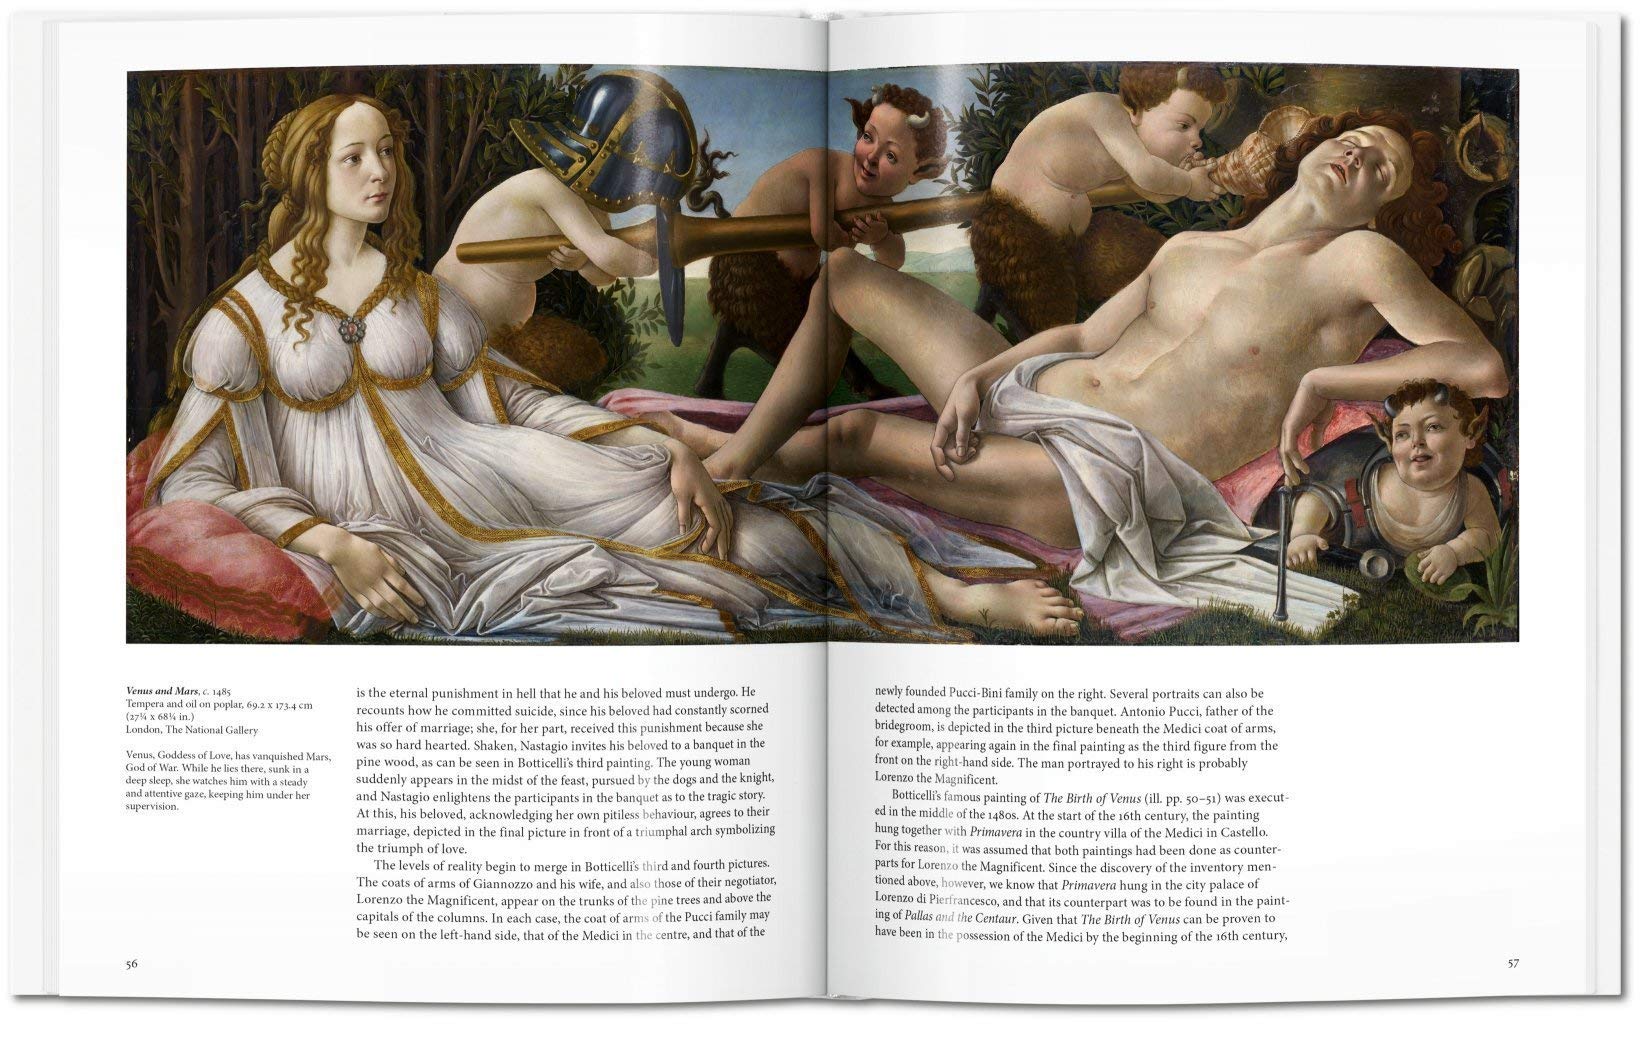 Hardcover Botticelli